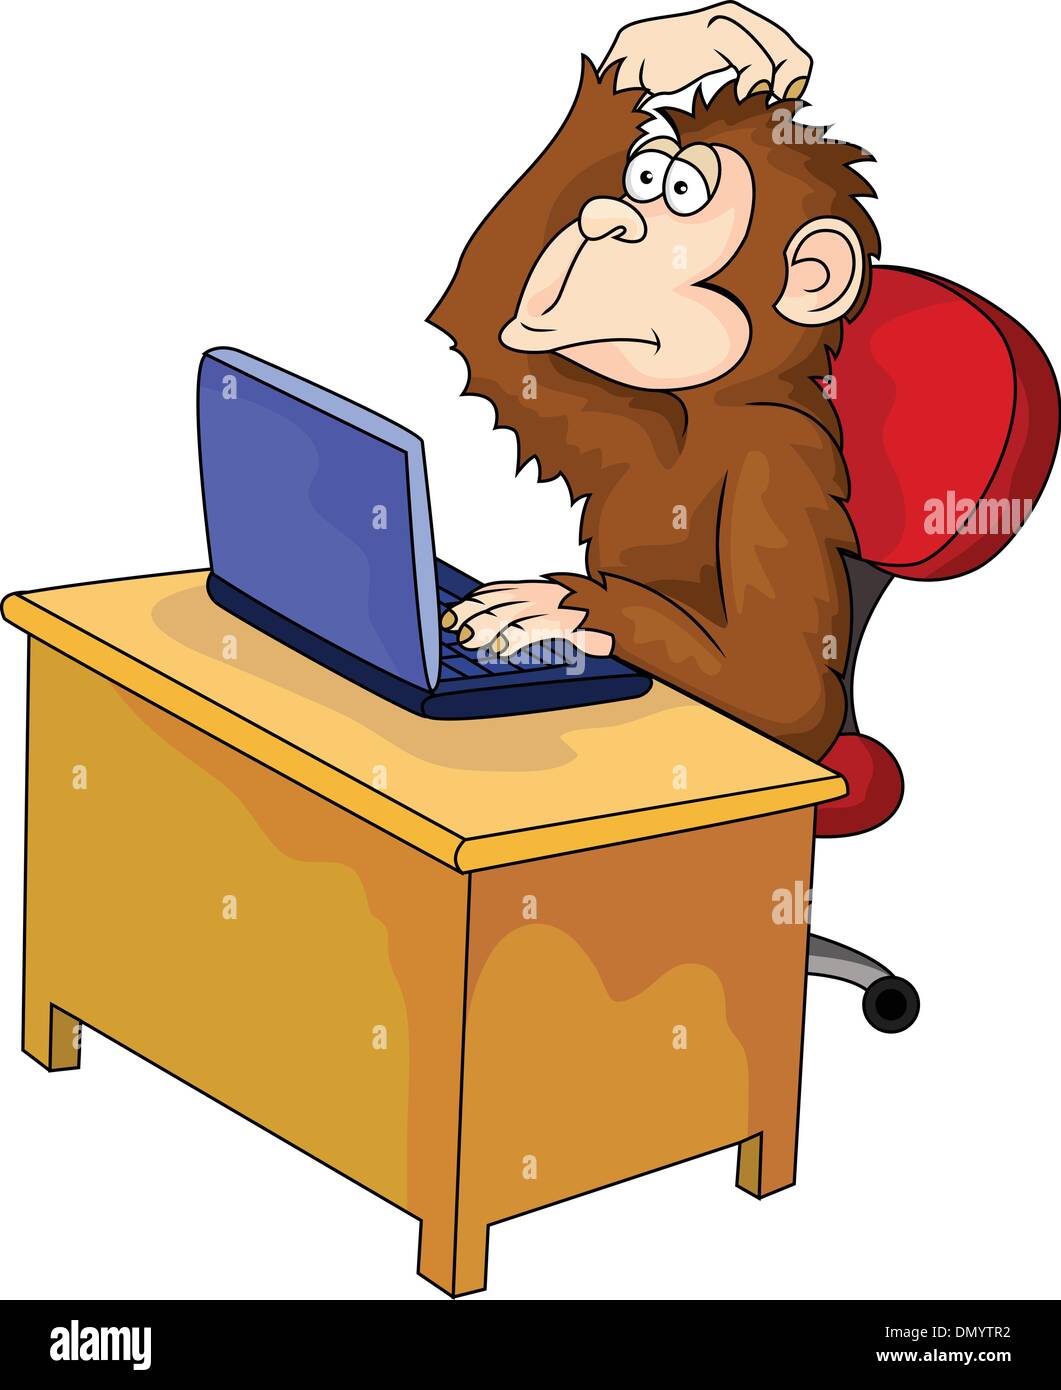 Monkey cartoon with computer Stock Vector